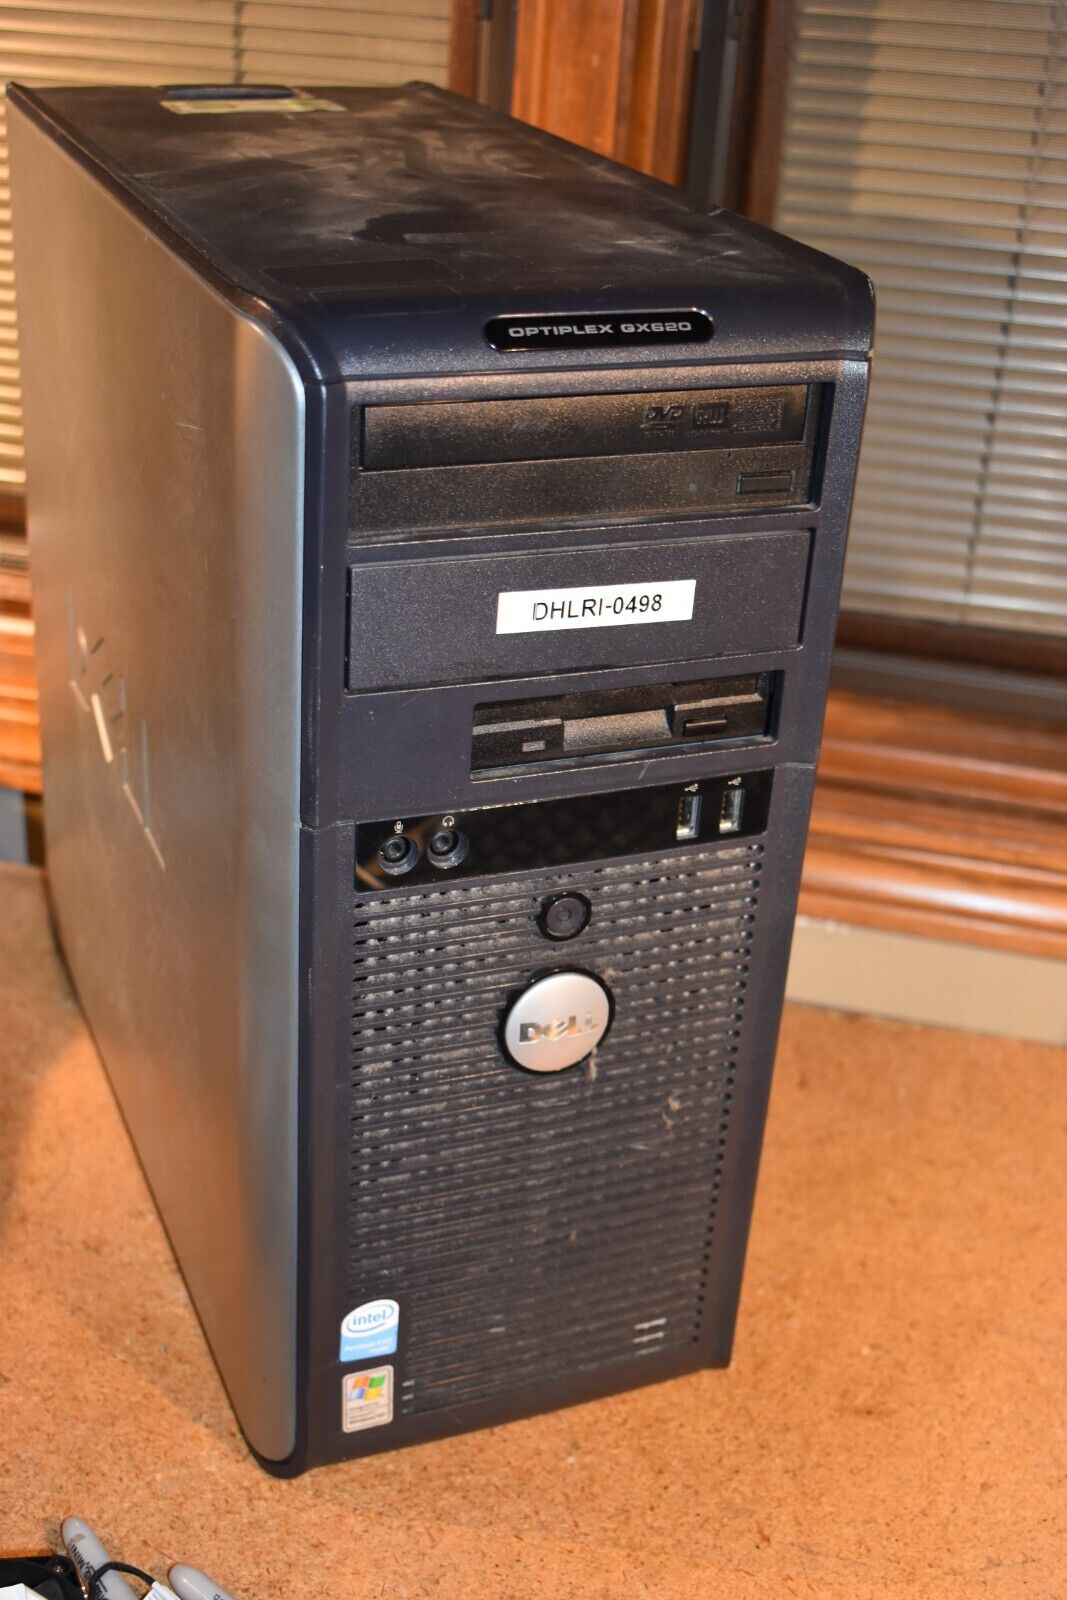 Dell Optiplex GX620 Desktop Pentium 4 3.2GHz 1GB 500GB Windows XP Floppy Drive